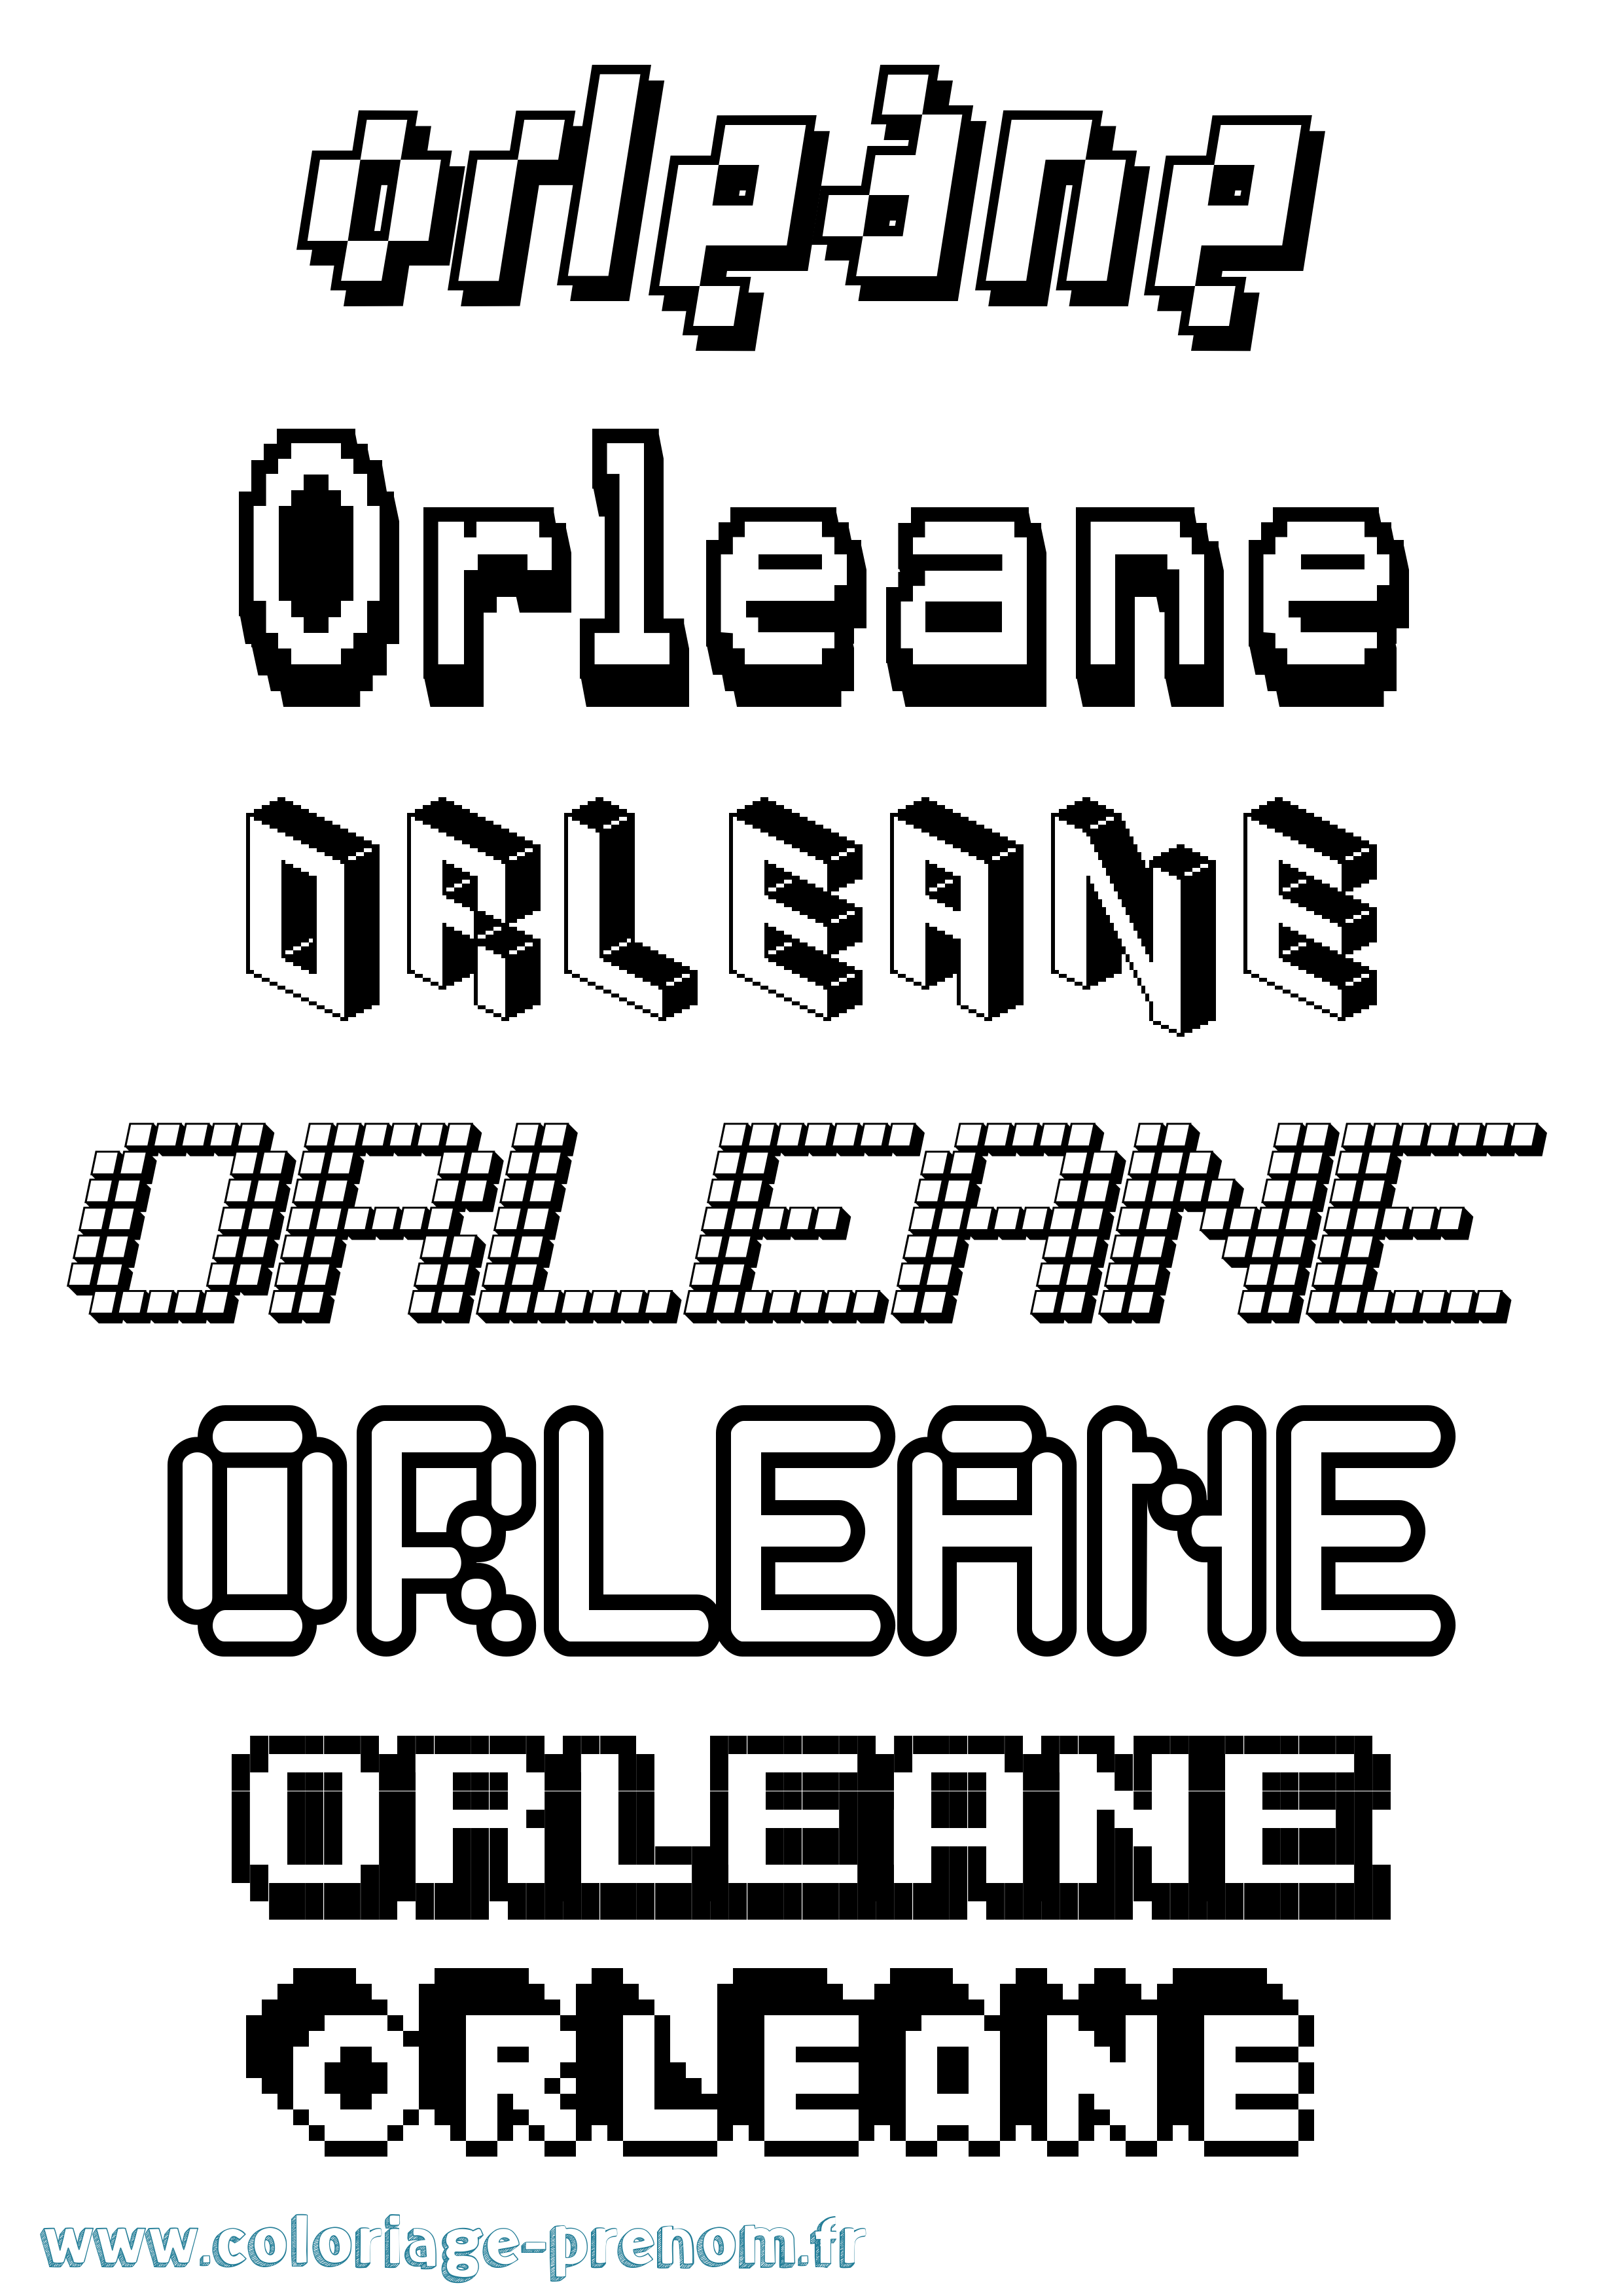 Coloriage prénom Orleane Pixel